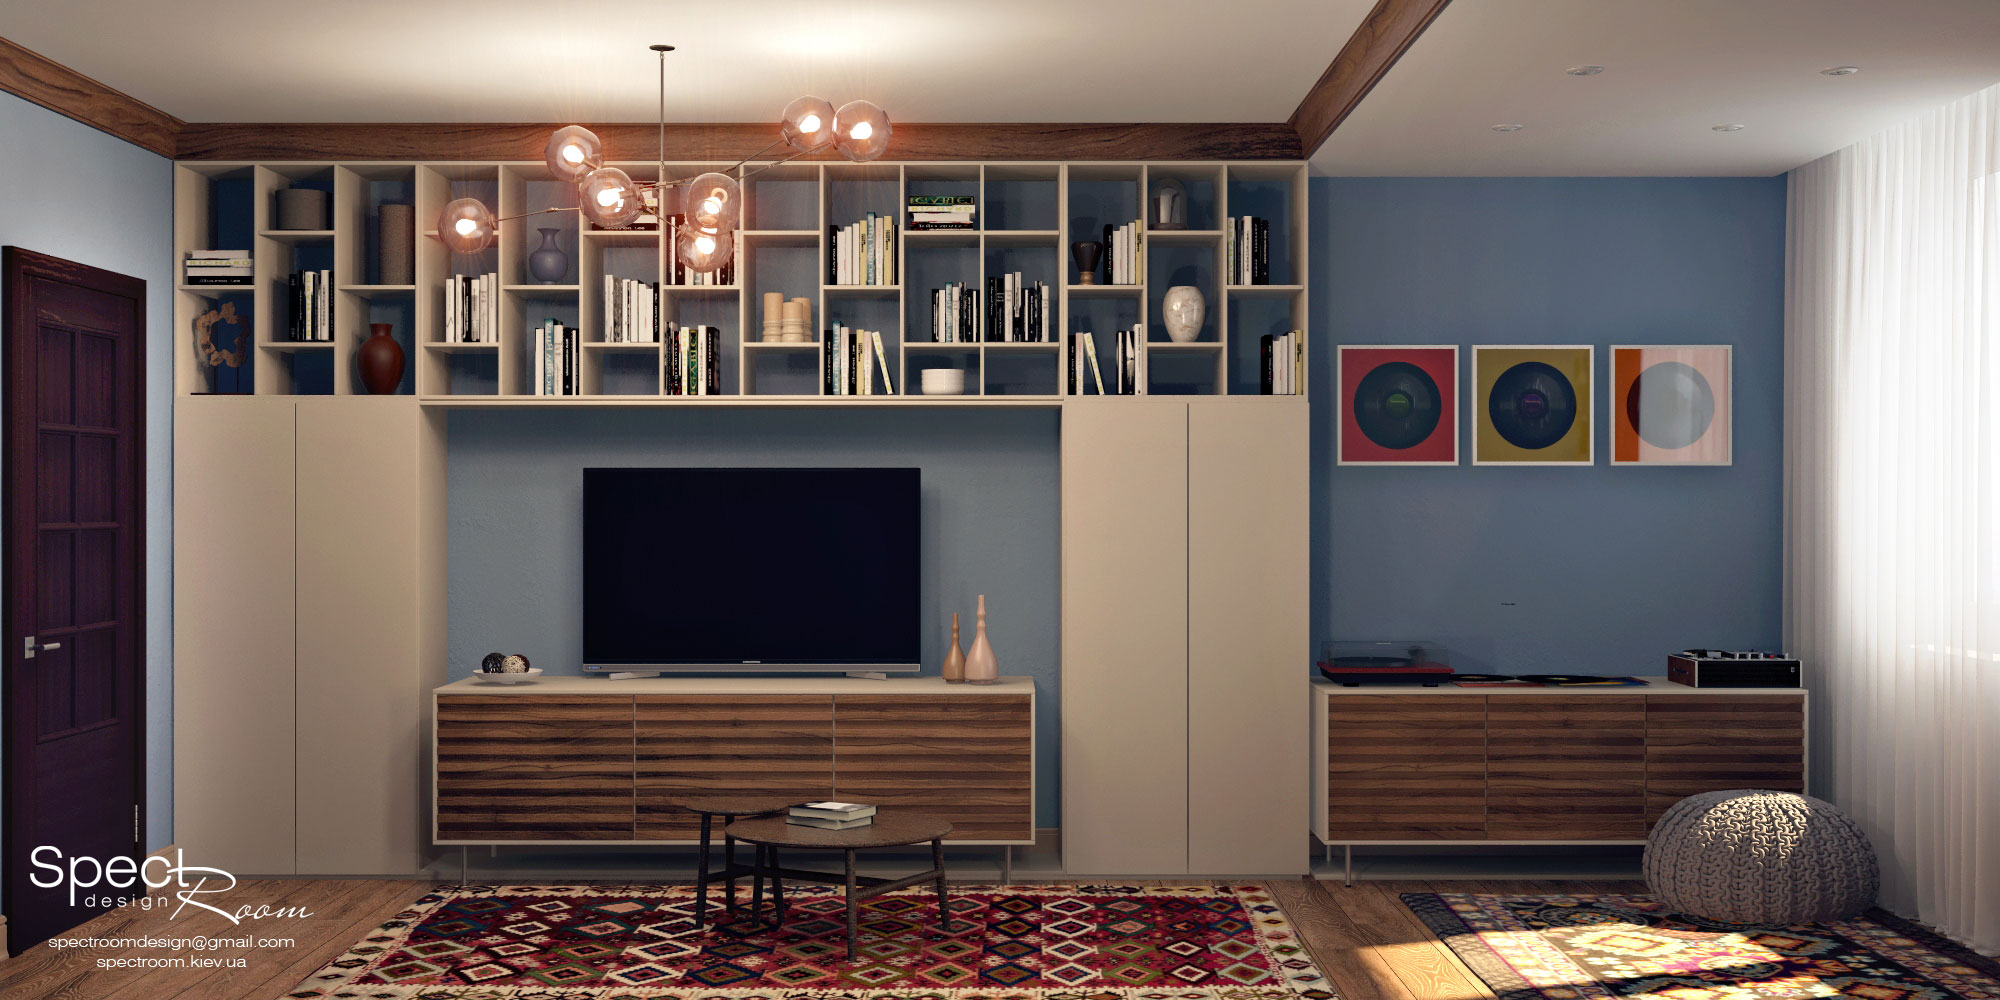 Дизайн квартири в середземноморському стилі  - Spectroom